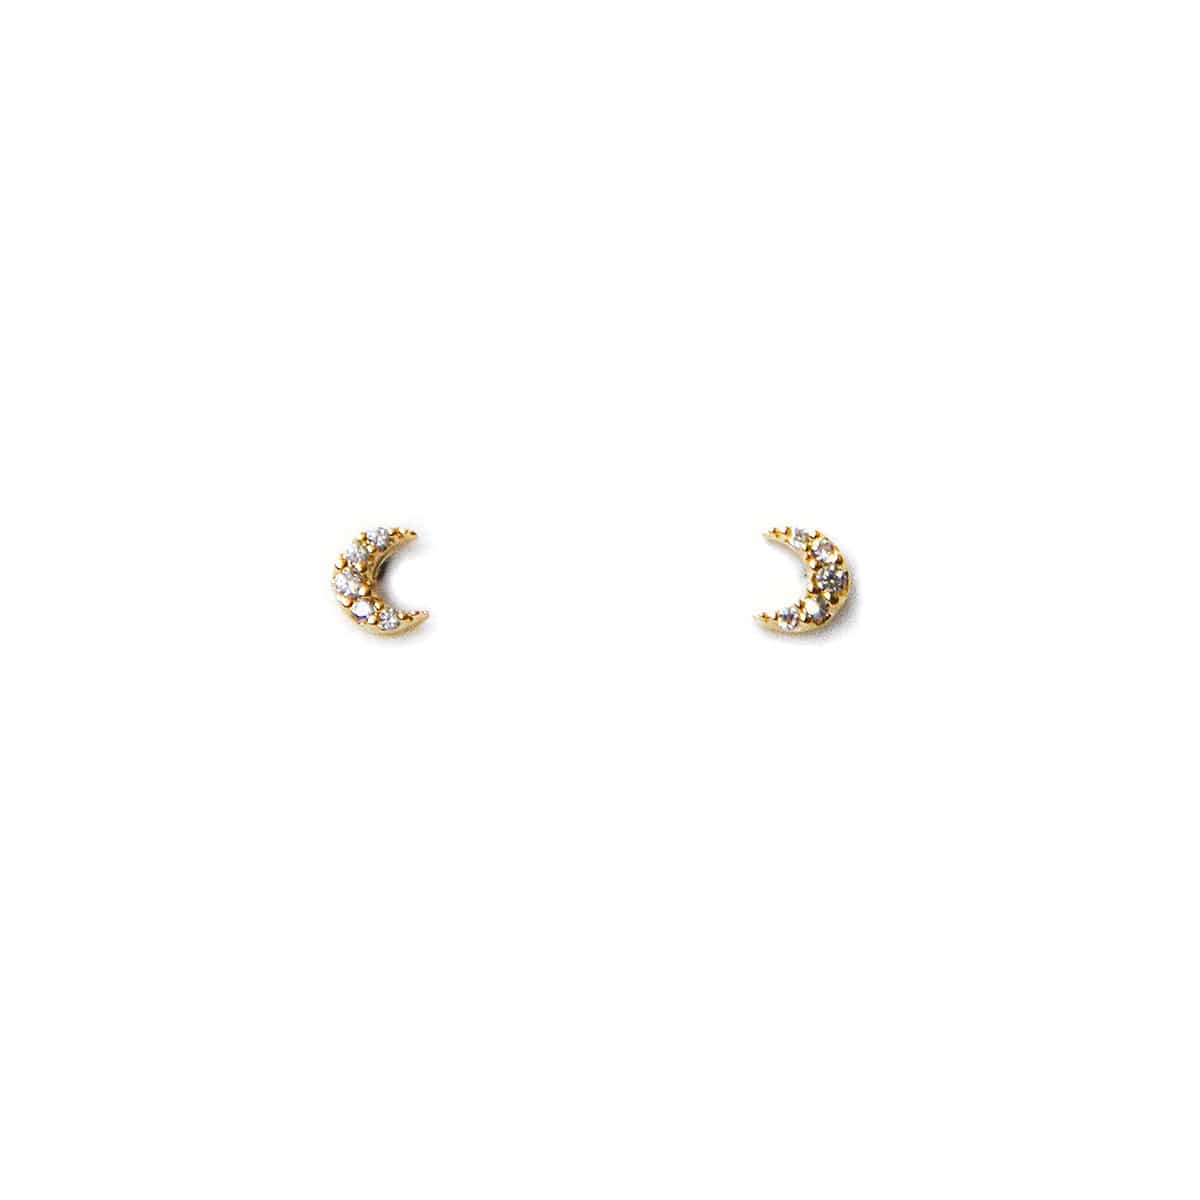 TAI JEWELRY Earrings GOLD Mini Pave Moon Earrings